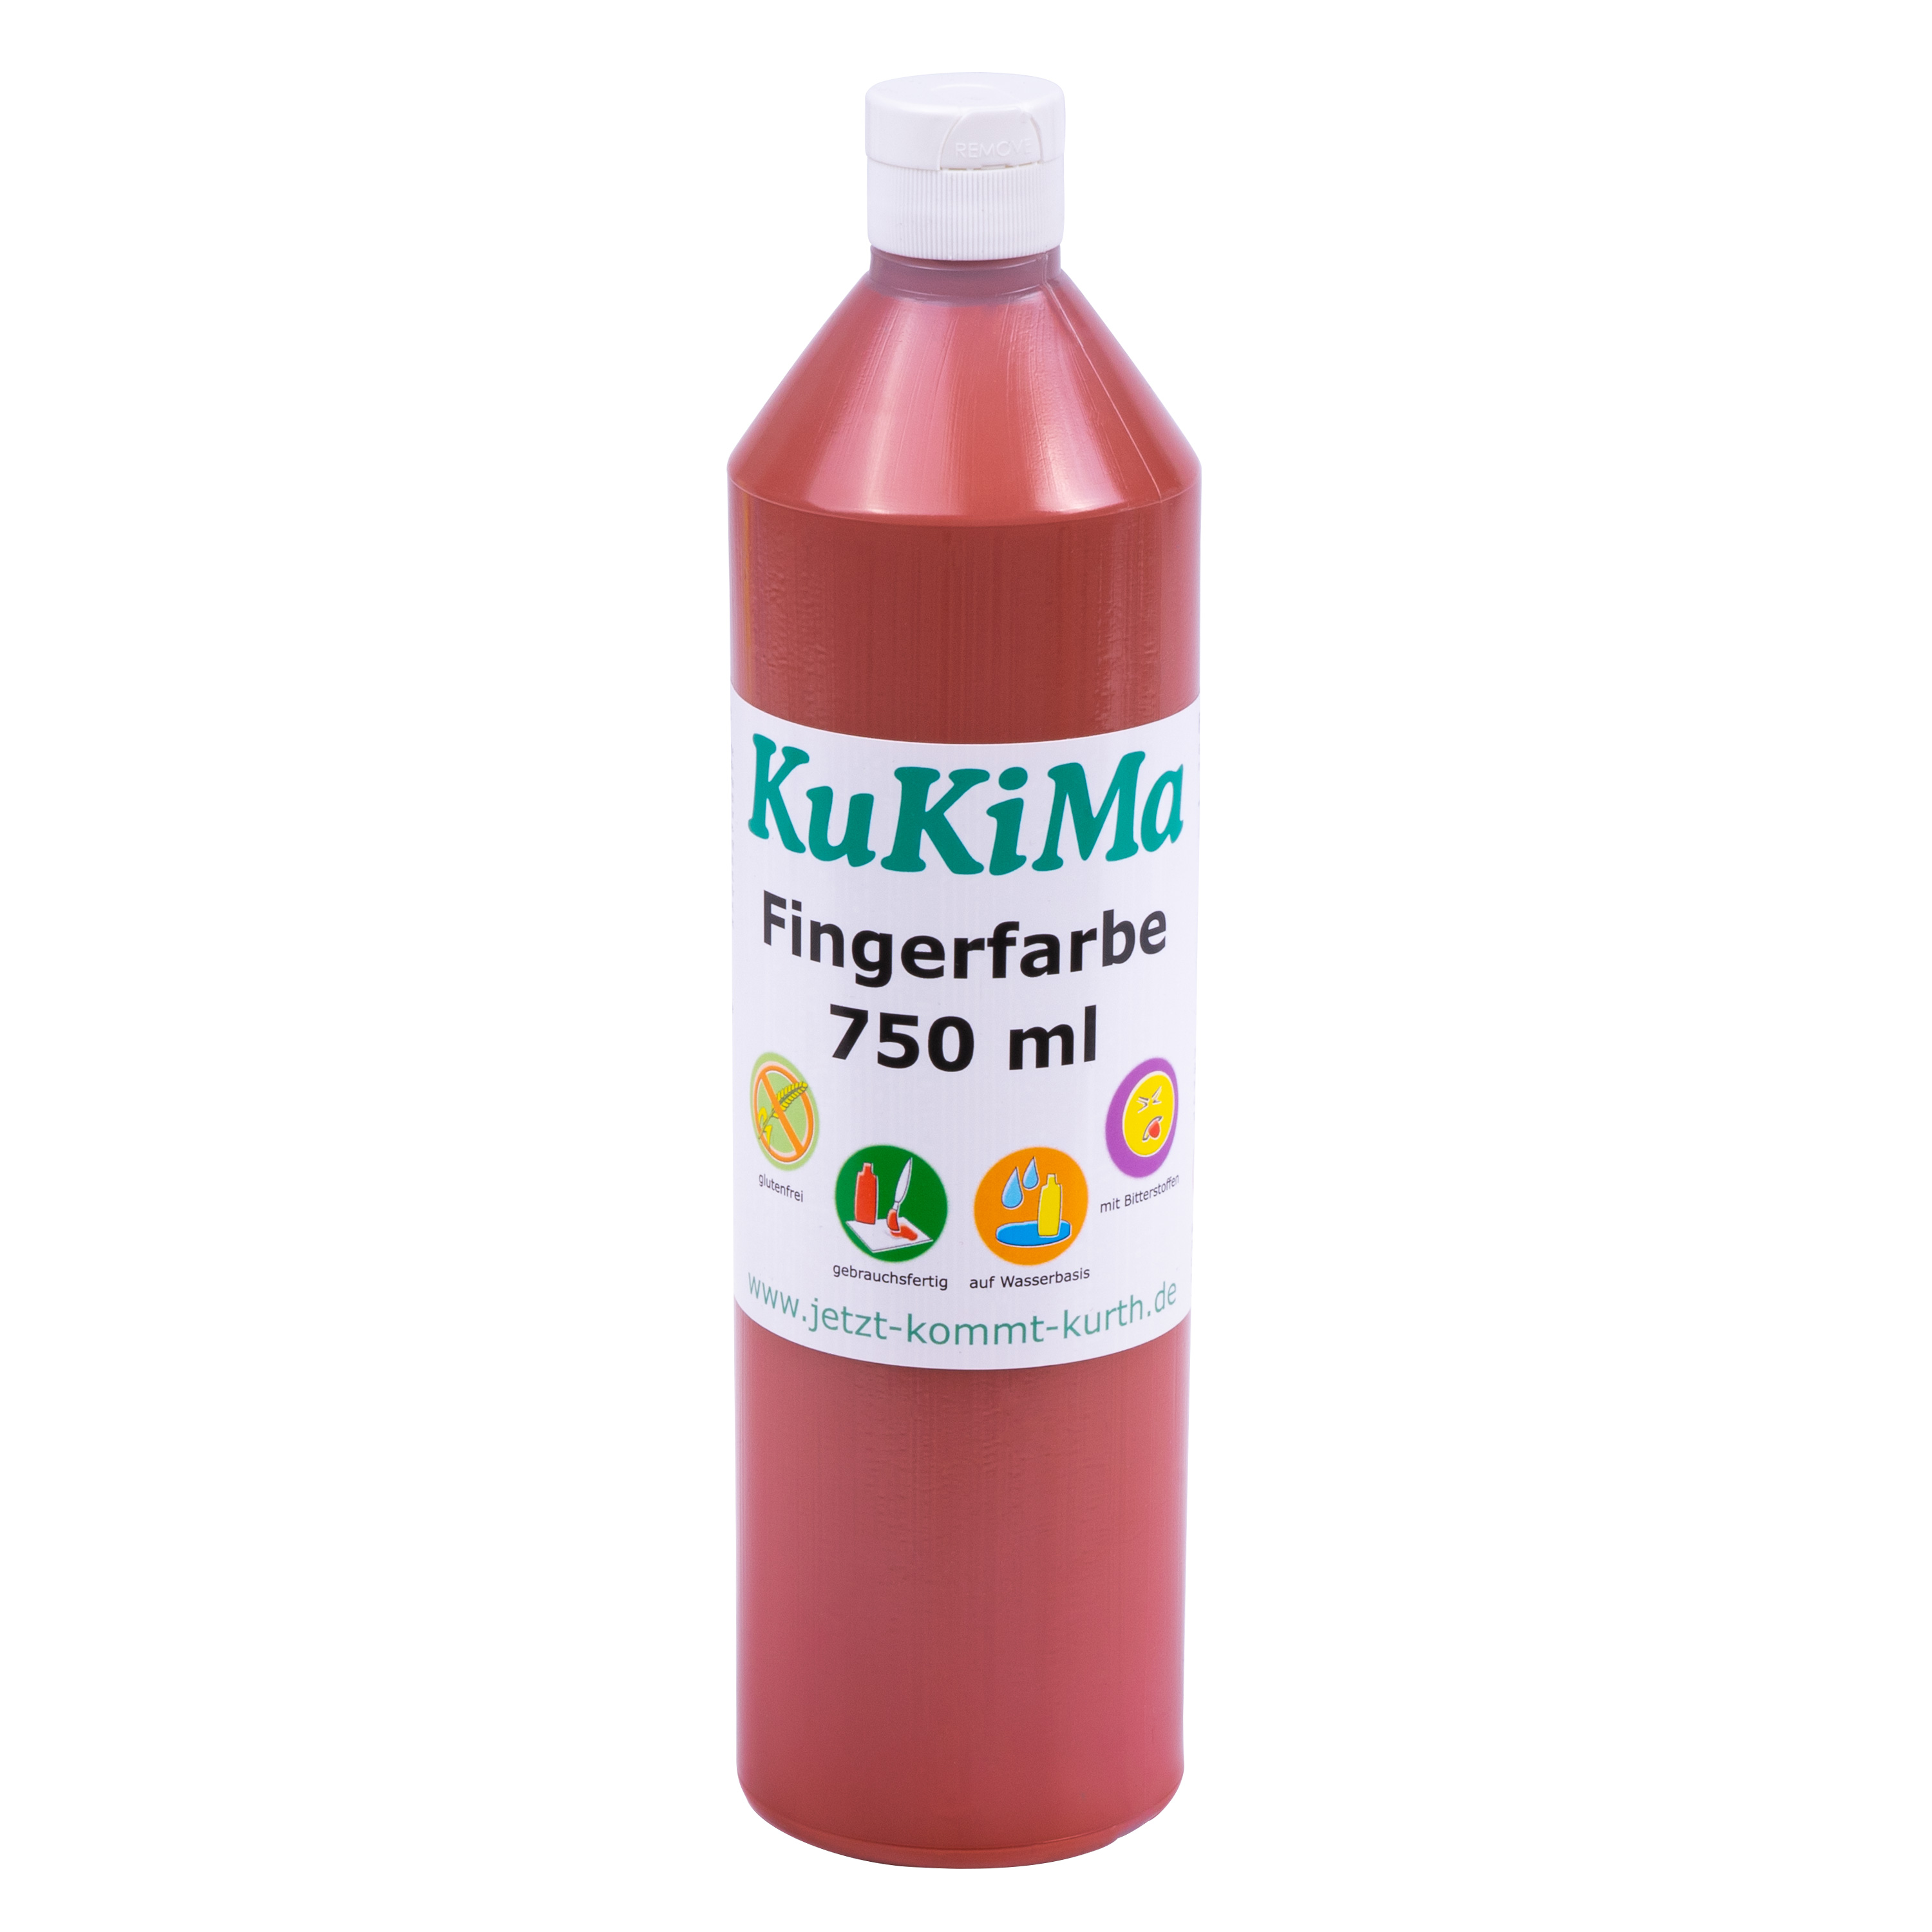 KuKiMa Fingerfarbe 750 ml, braun